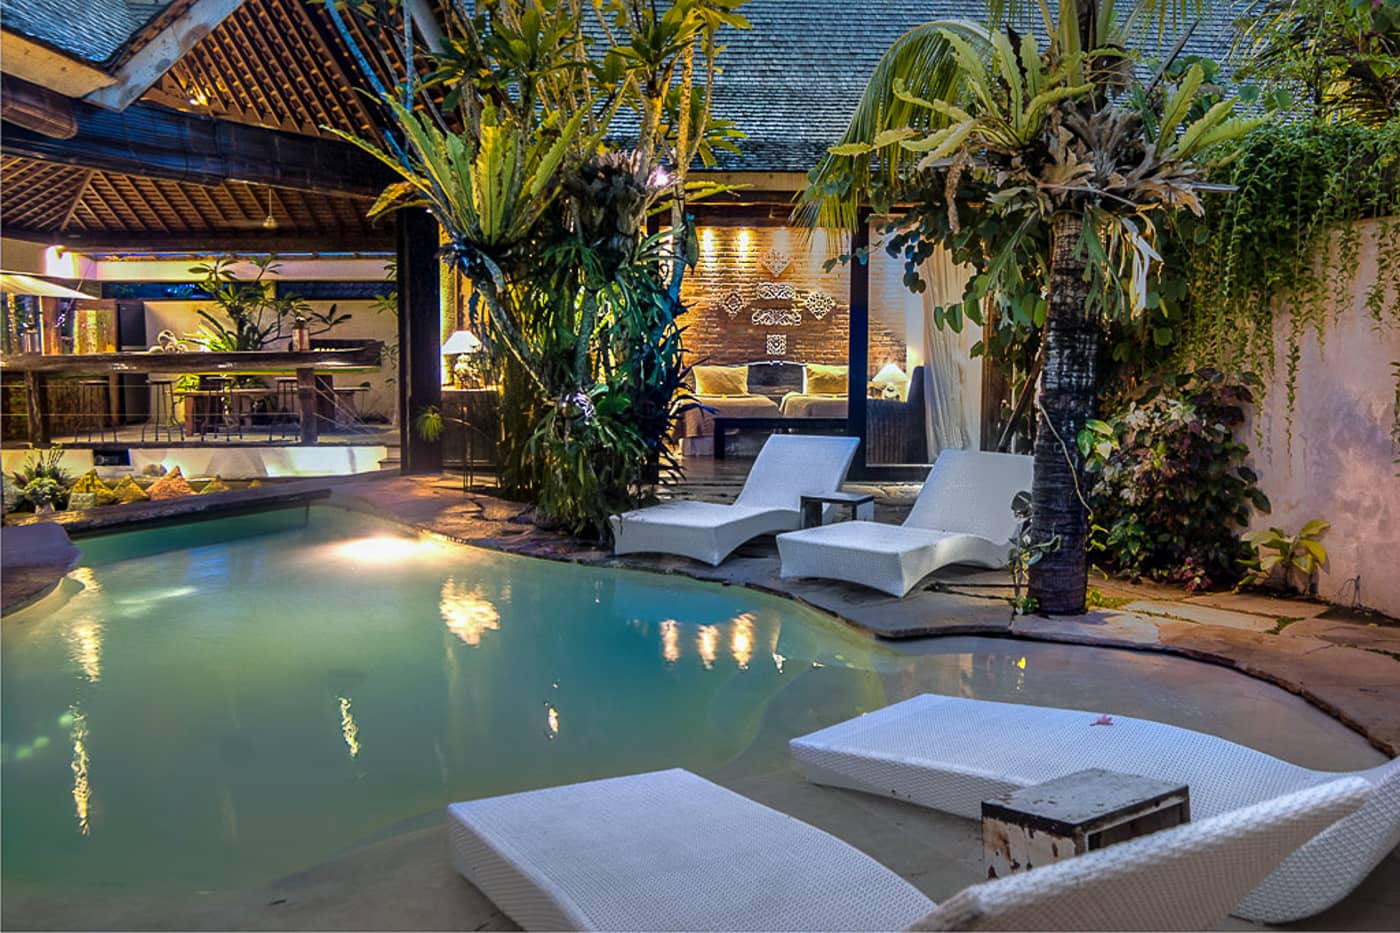 Villa Djukun photos in Seminyak Bali